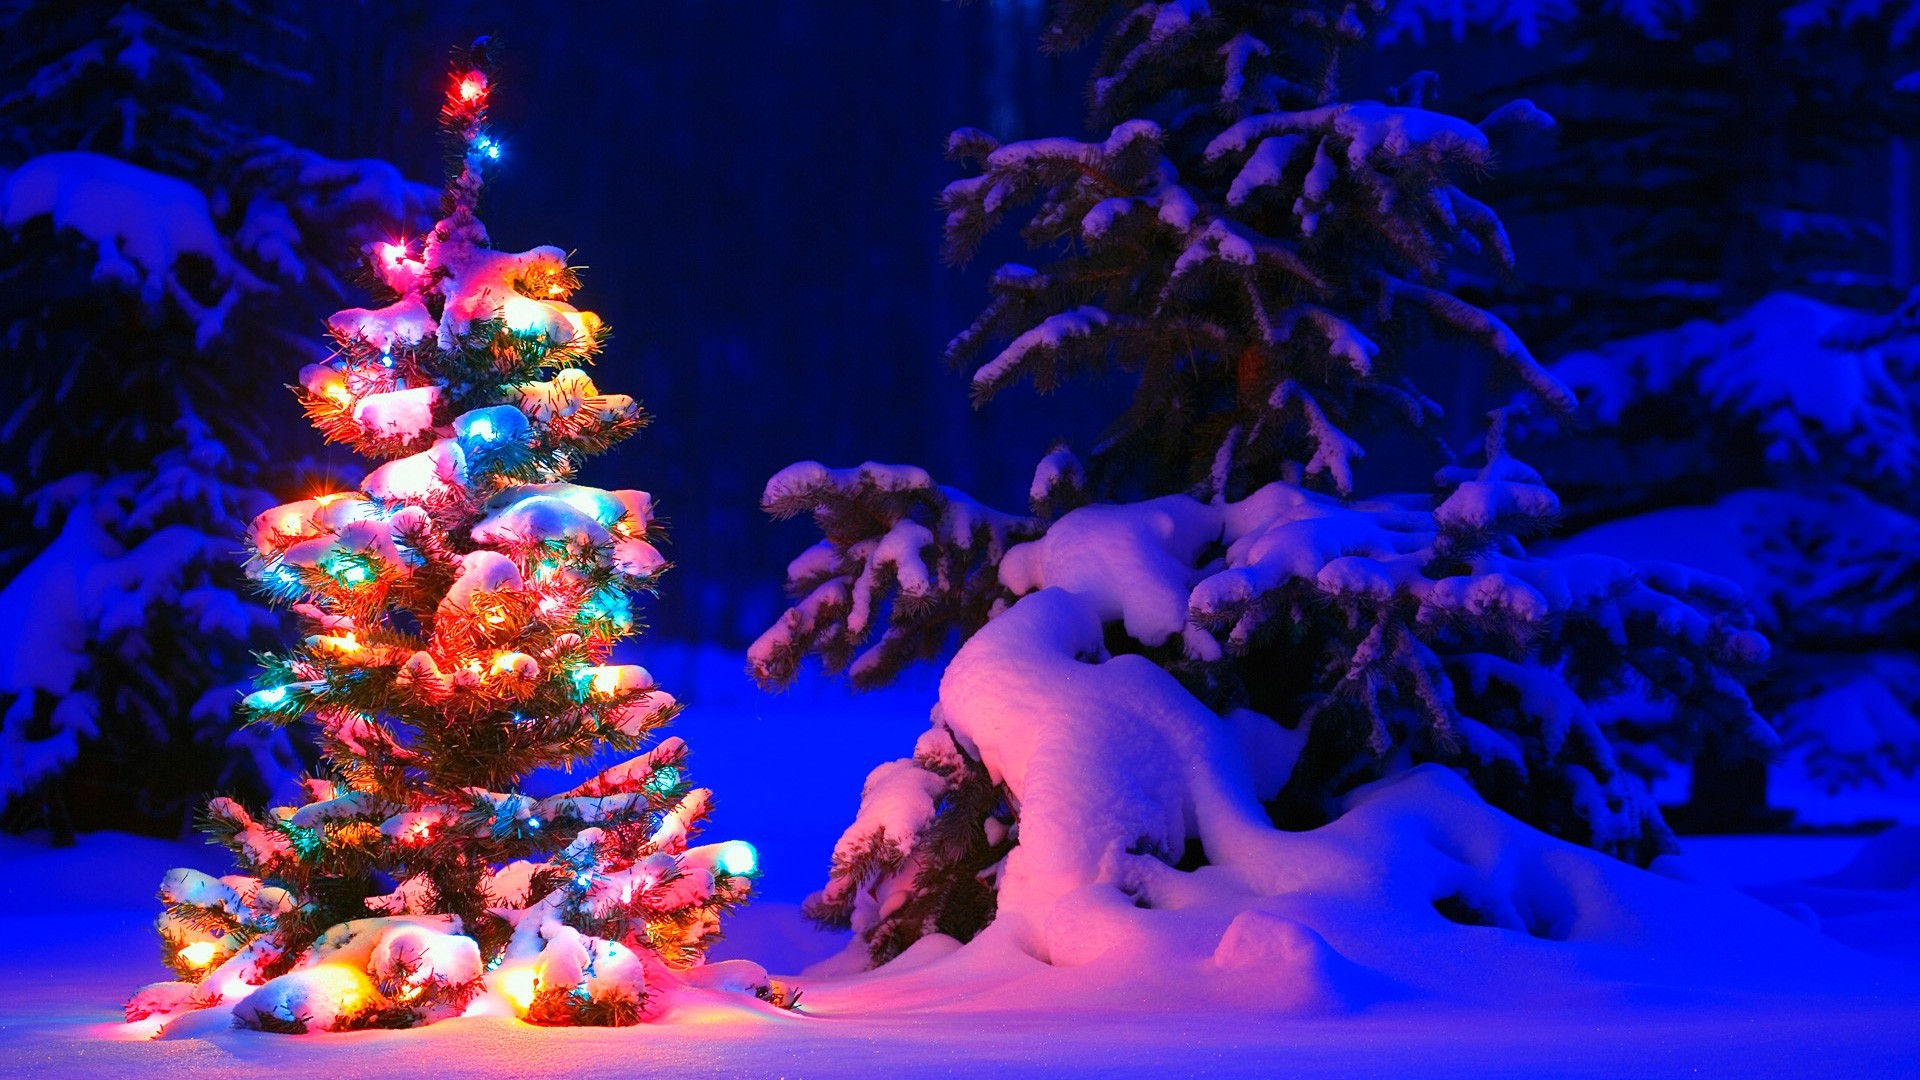 1920x1080 ... x 1080 Original. Description: Download Snowy Christmas Tree Lights  Christmas wallpaper ...